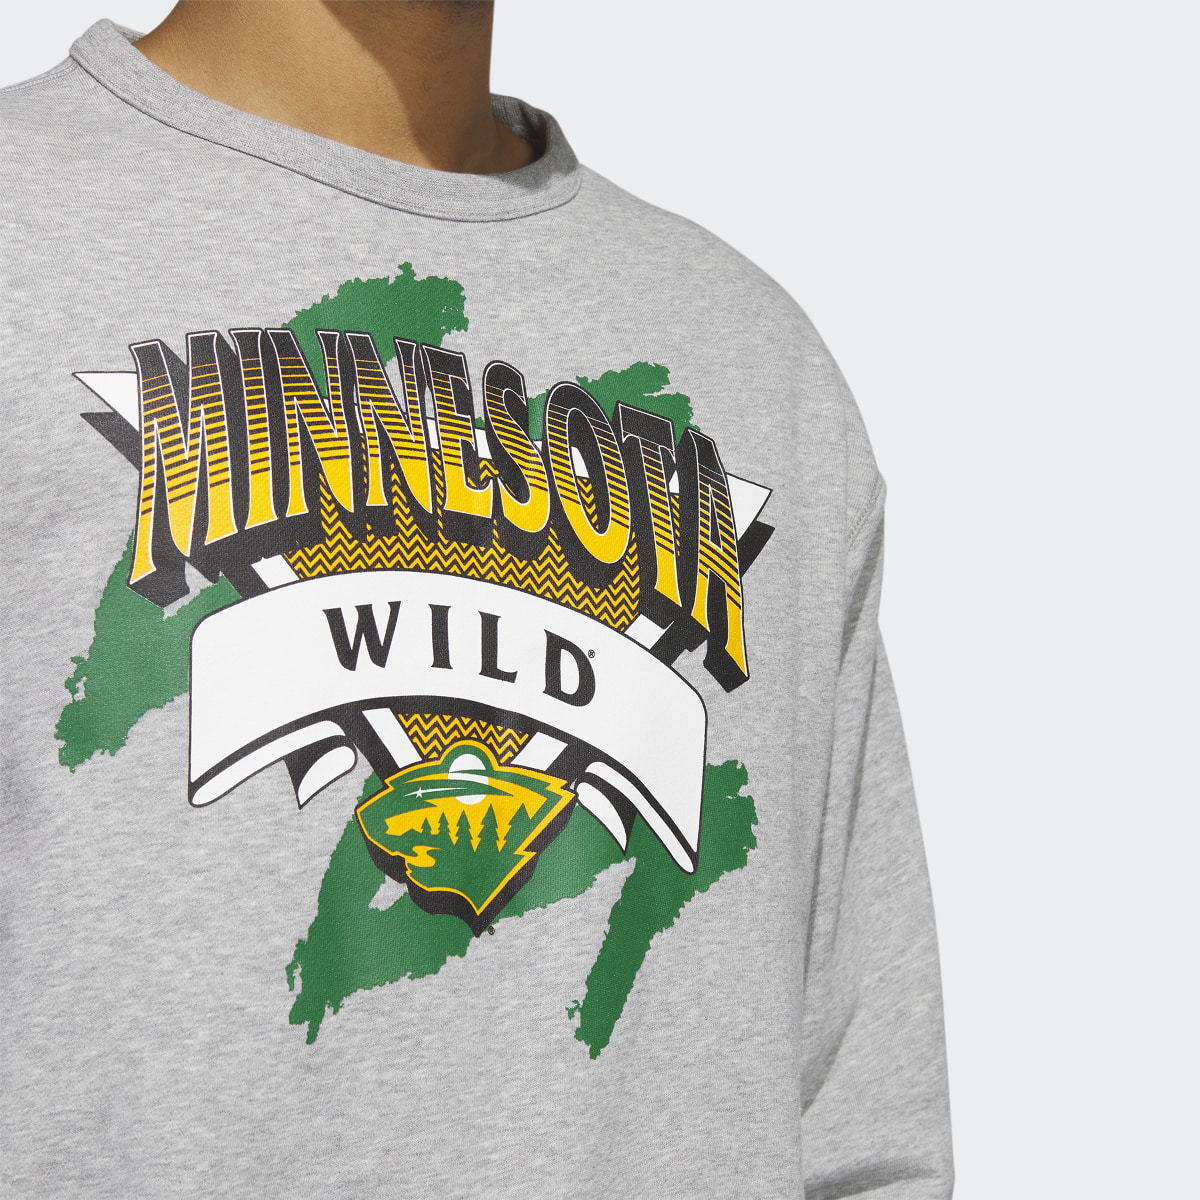 Adidas Wild Vintage Crew Sweatshirt. 6